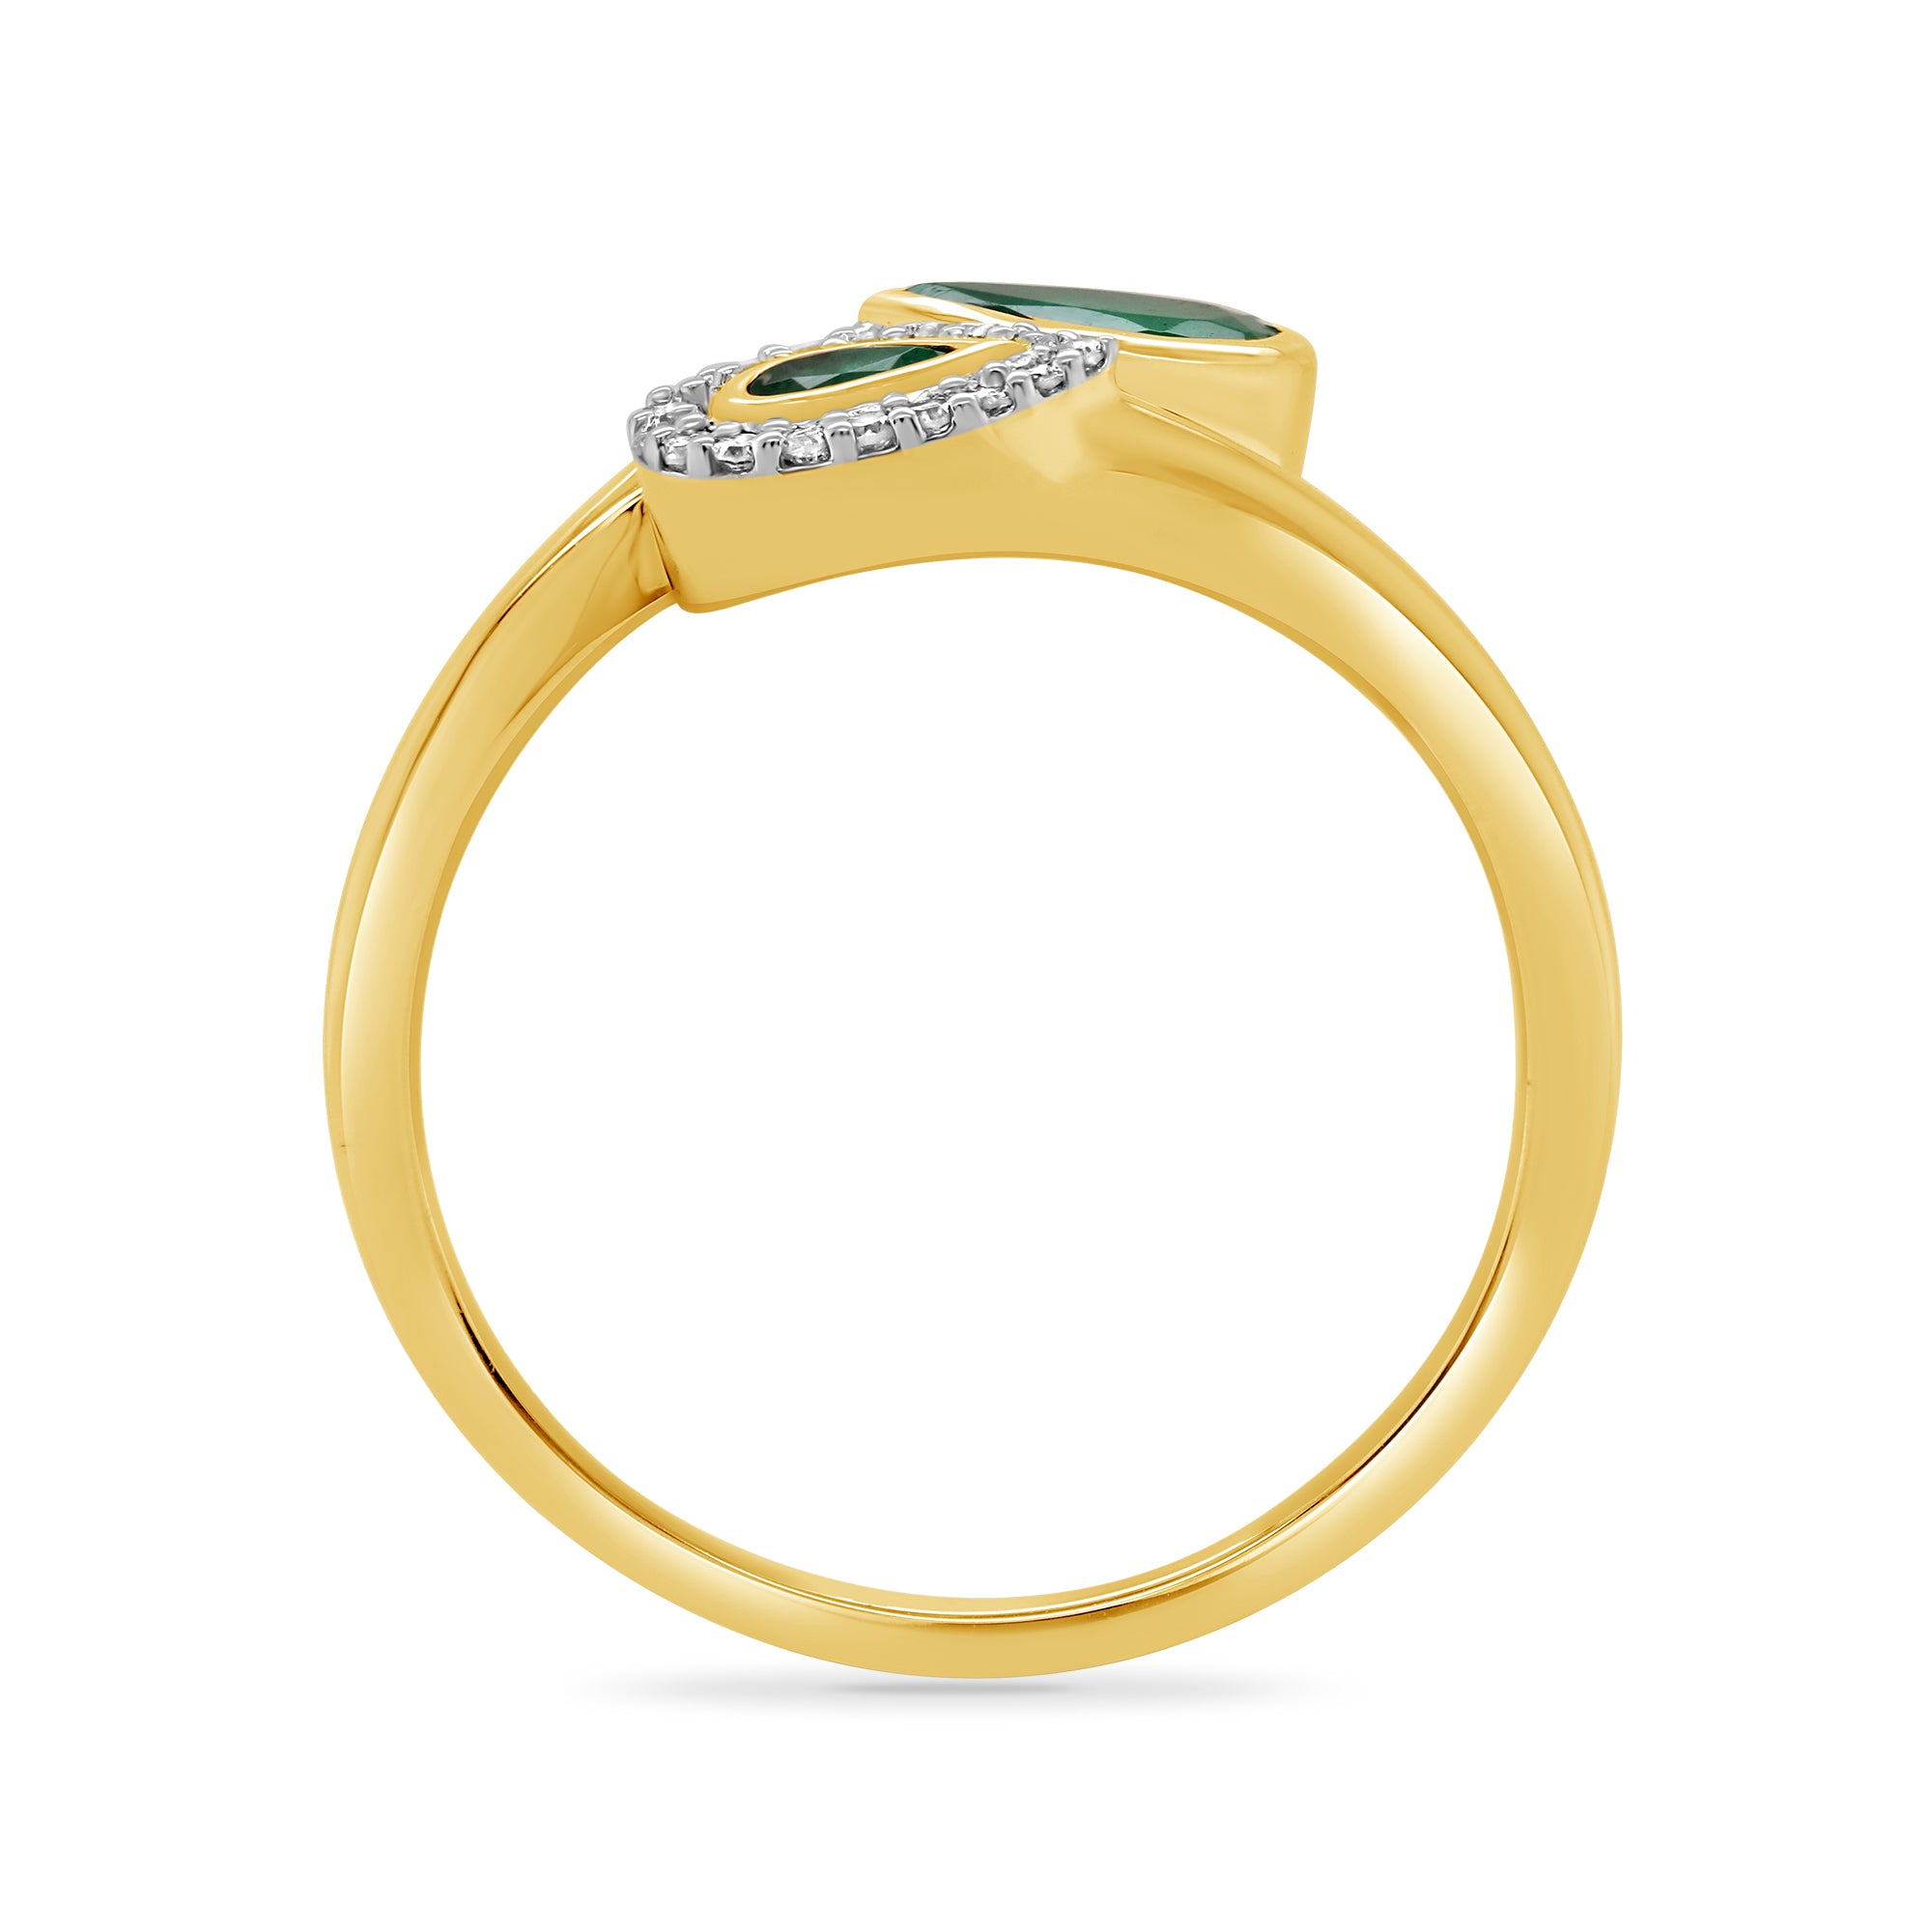 9ct gold 6x4/4x2mm pear shape emerald & diamond x/o ring 0.06ct